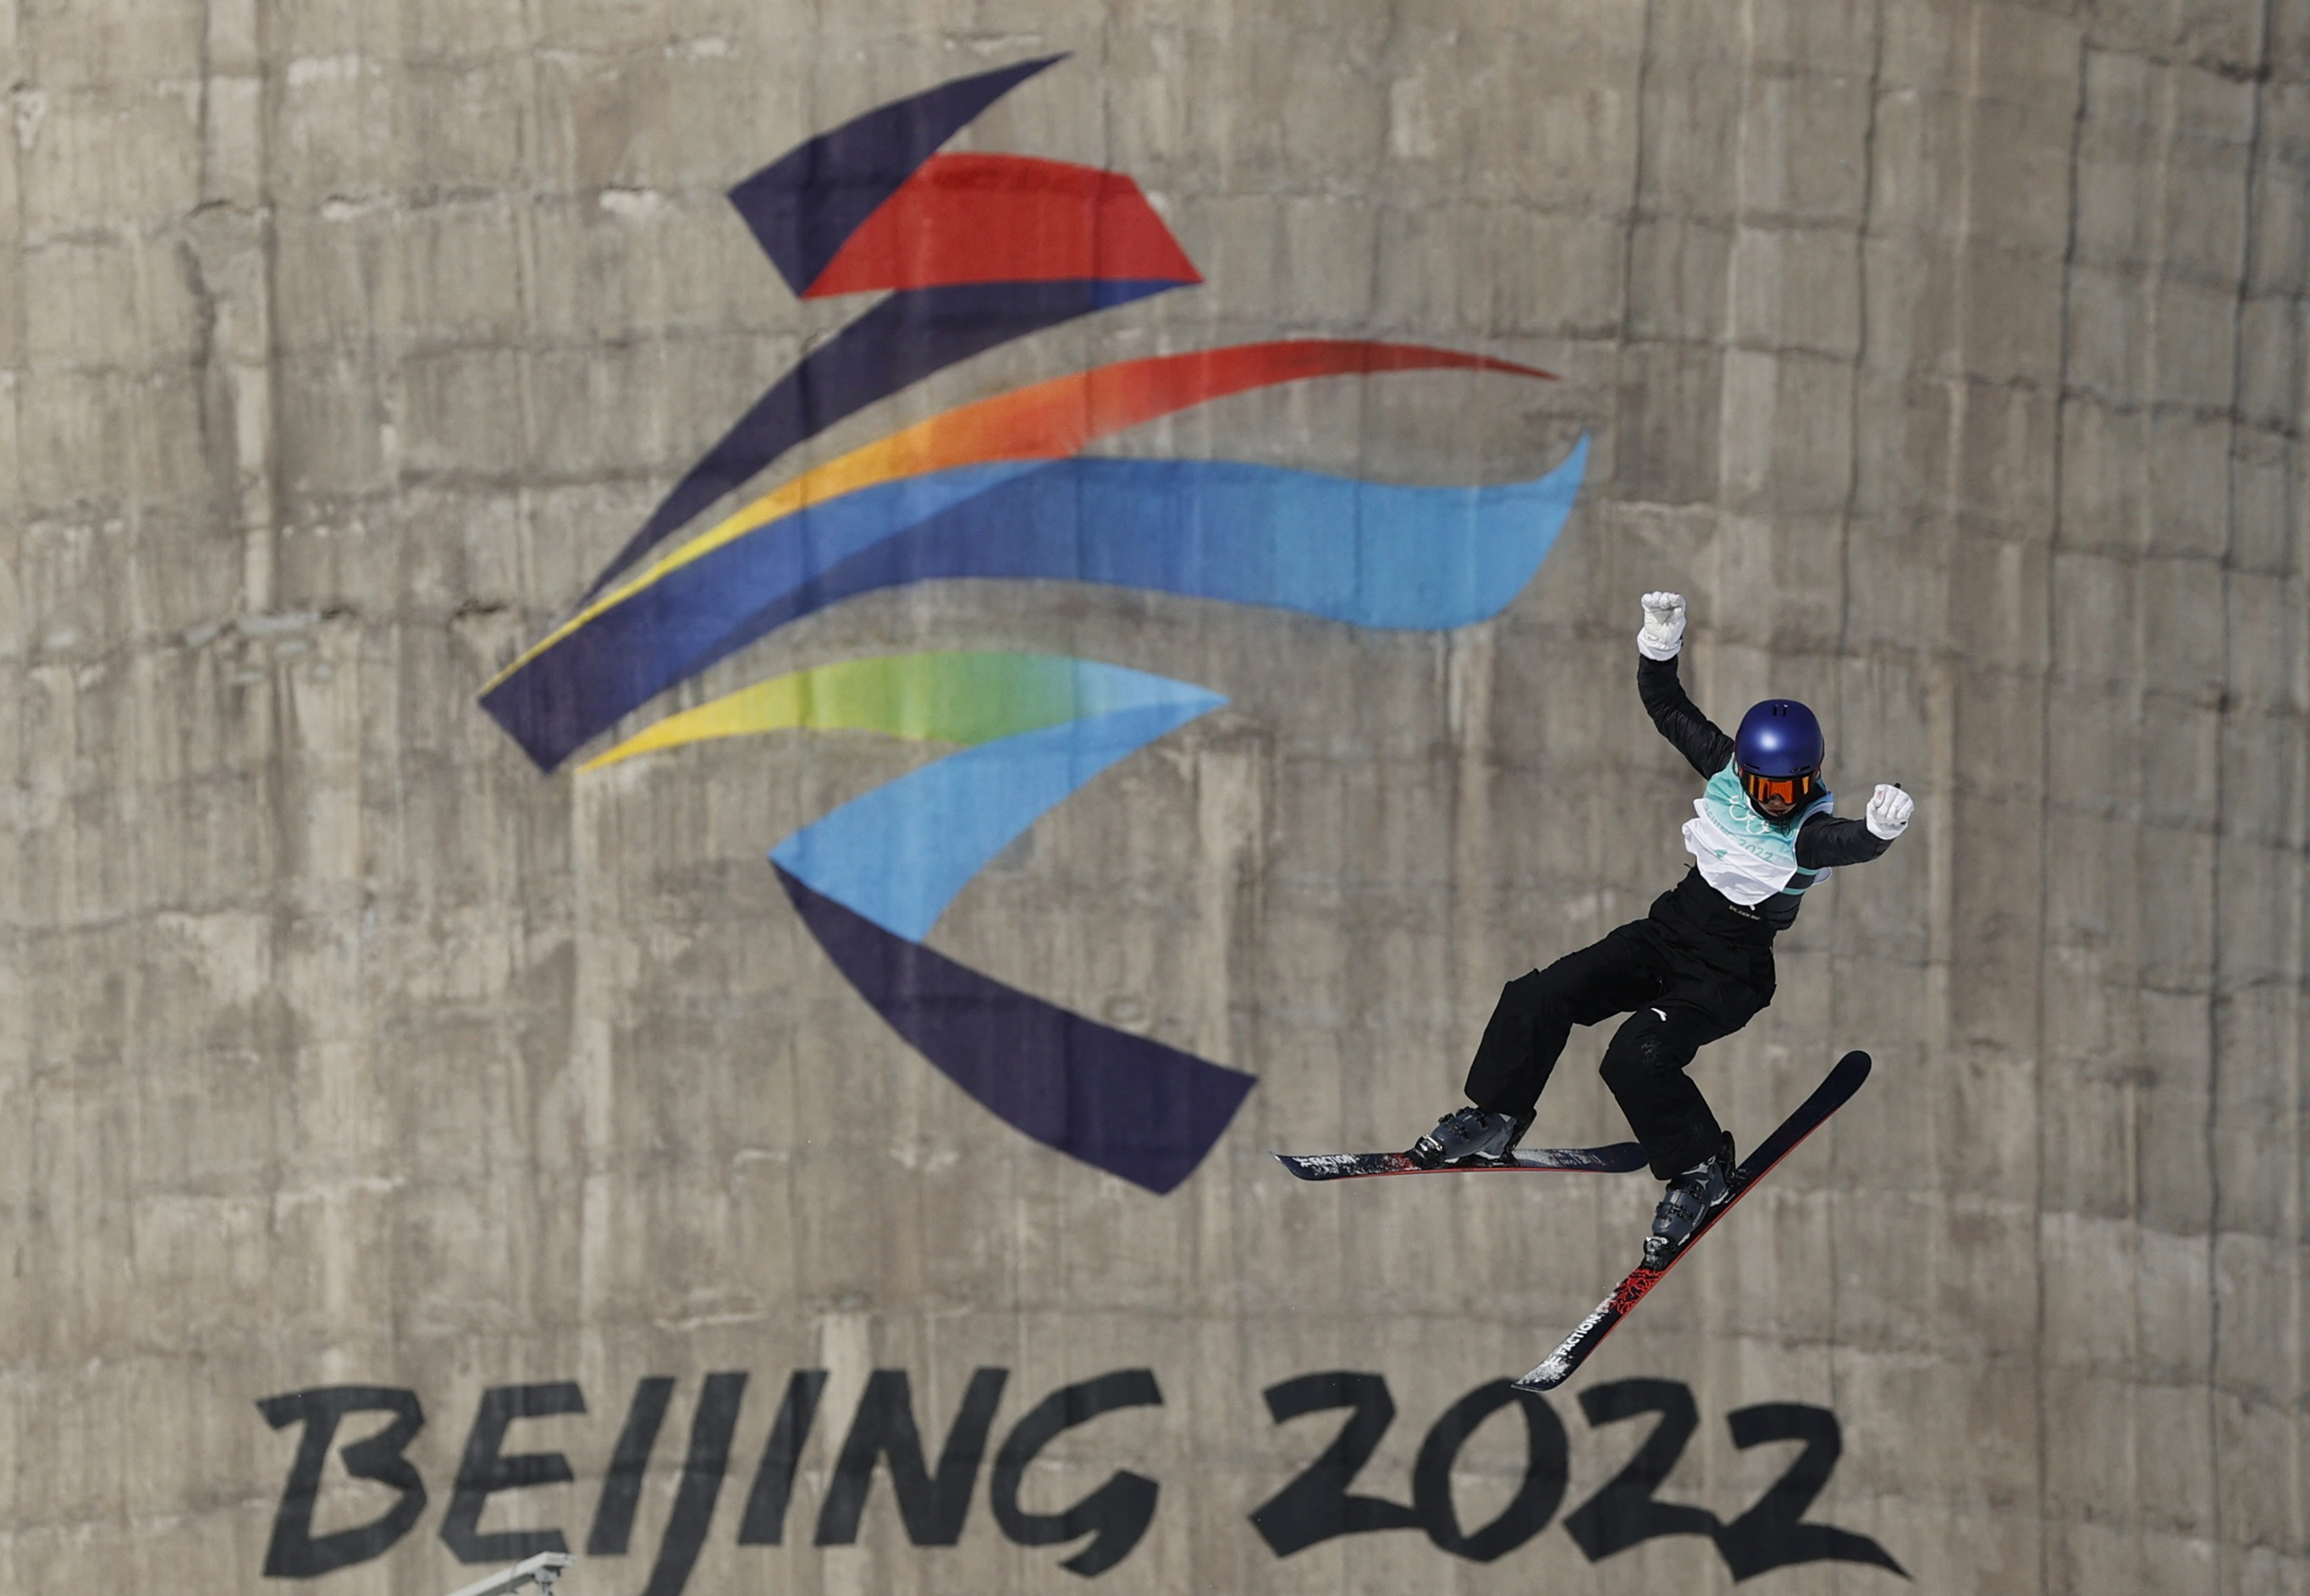 All about Olympic Skier Eileen Gu, 2022 Winter Olympics biggest hopeful